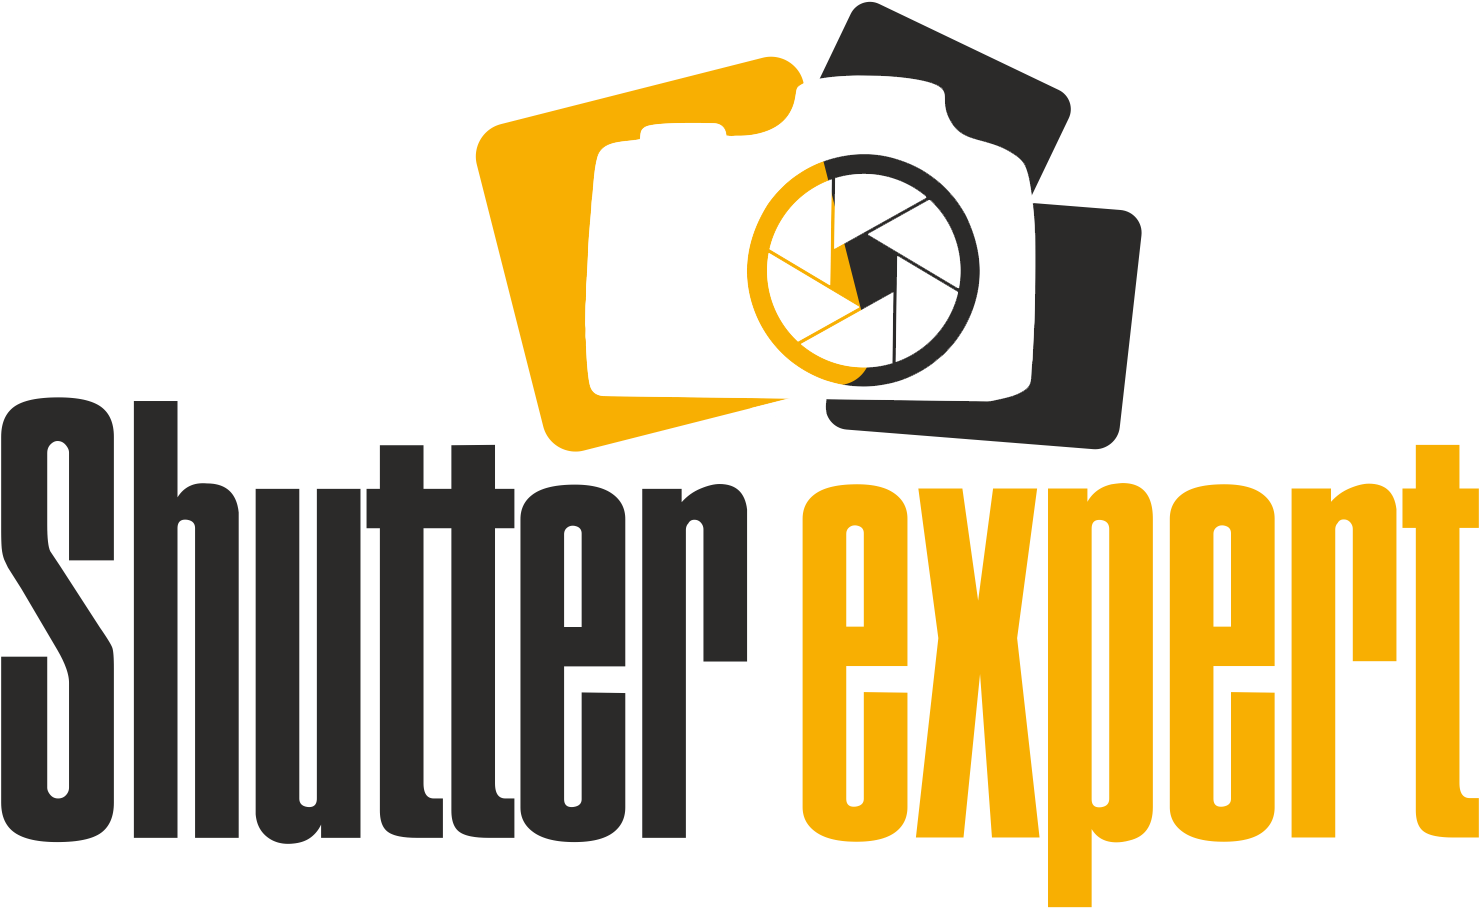 Expert The Shutter Expert - Graphic Design Clipart (2040x1197), Png Download